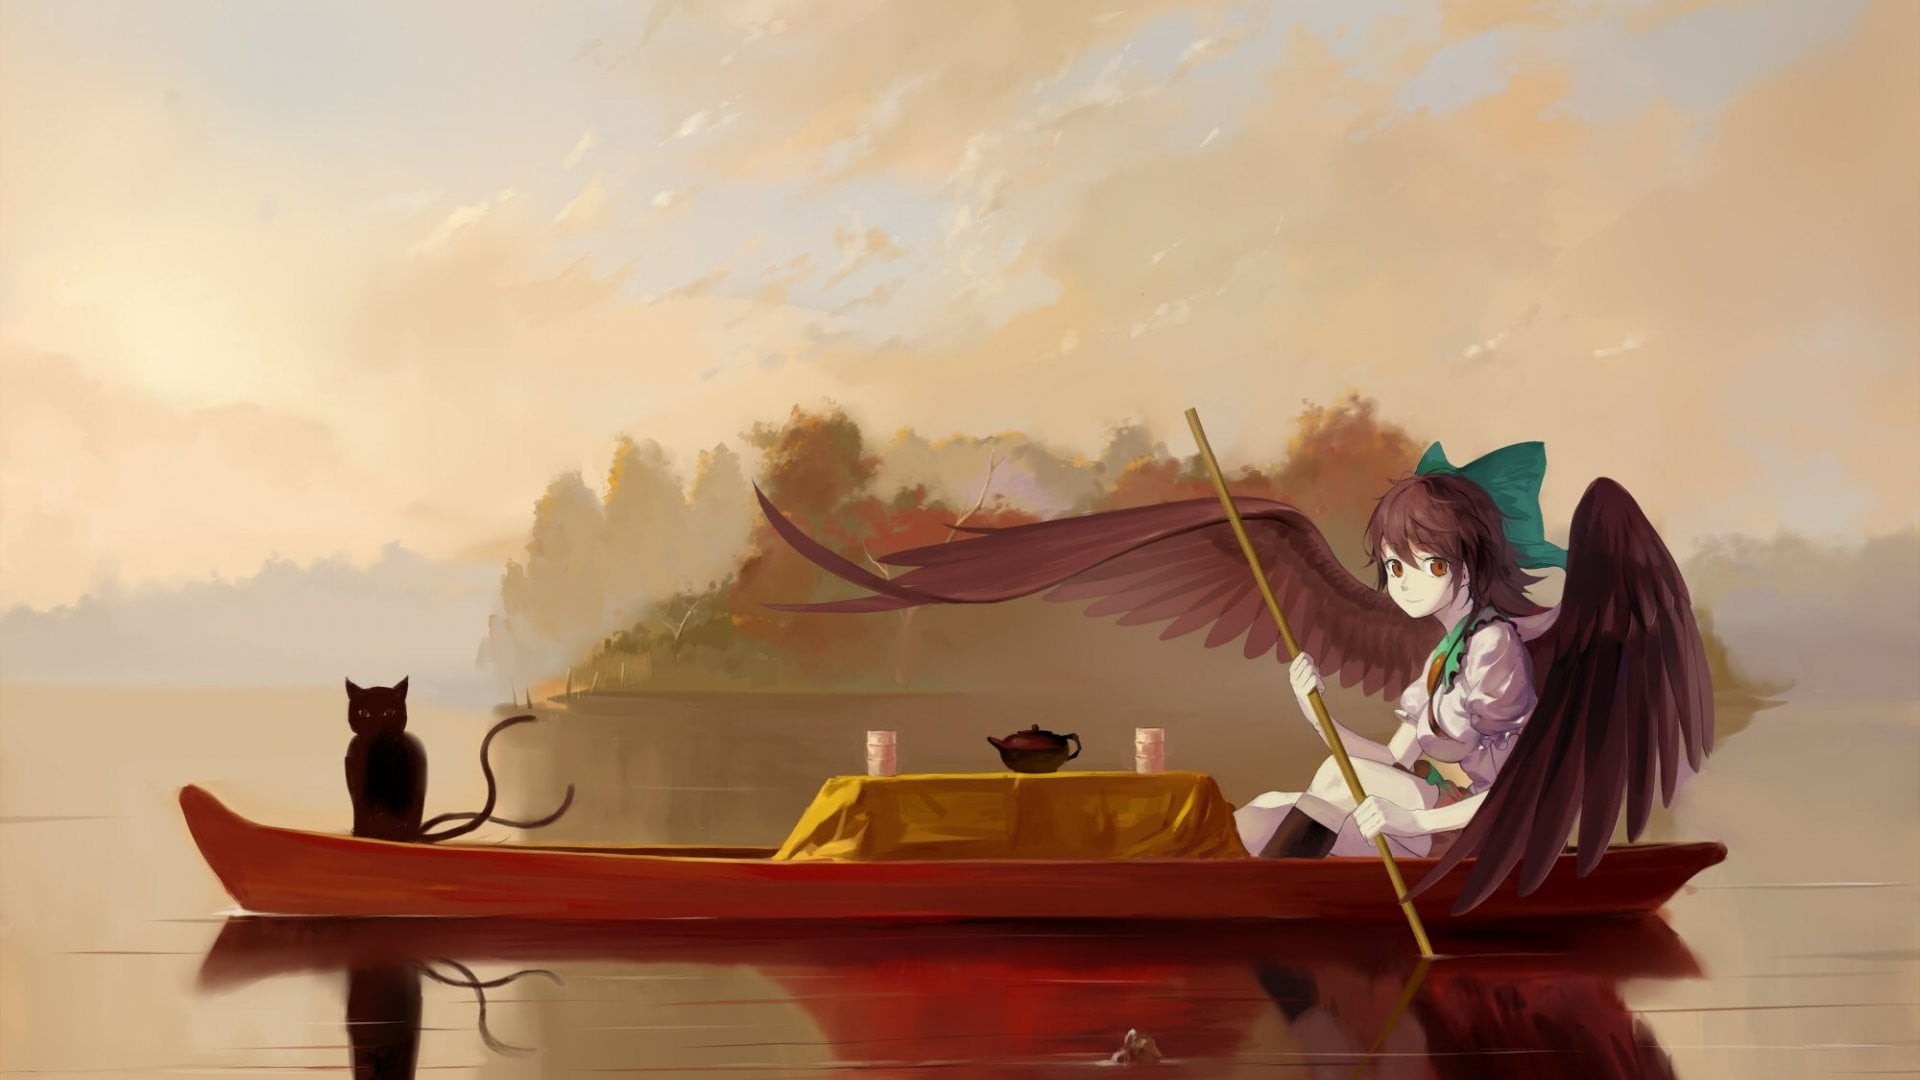 female angel in boat illustration, cat, boat, wings, river